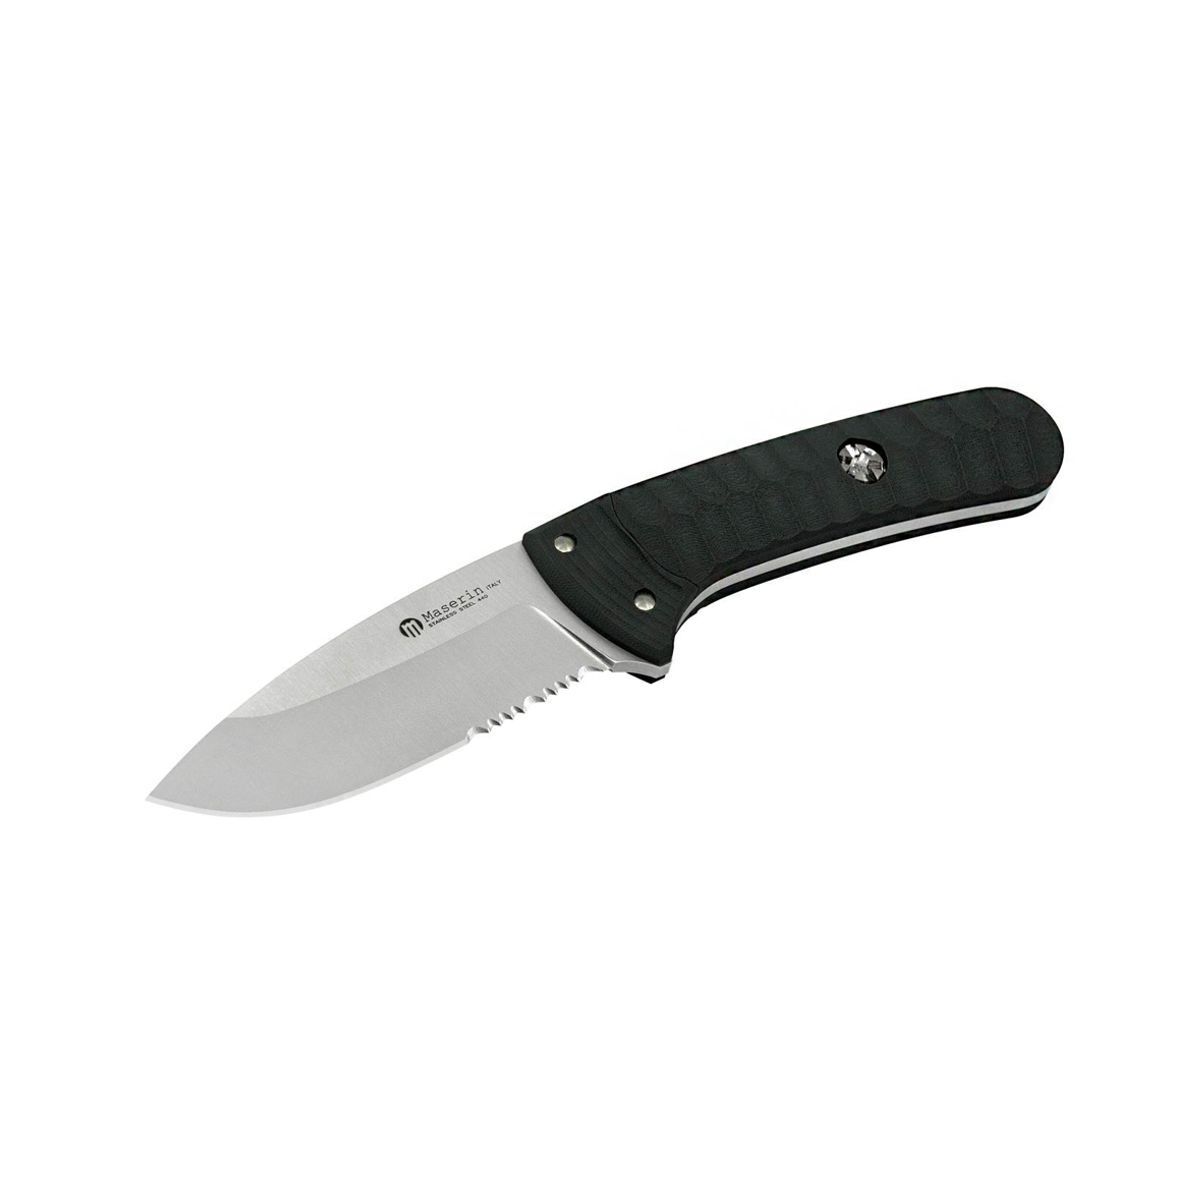 Maserin 975/G10B 85mm Sax Bushcraft Knife (Black Handle)